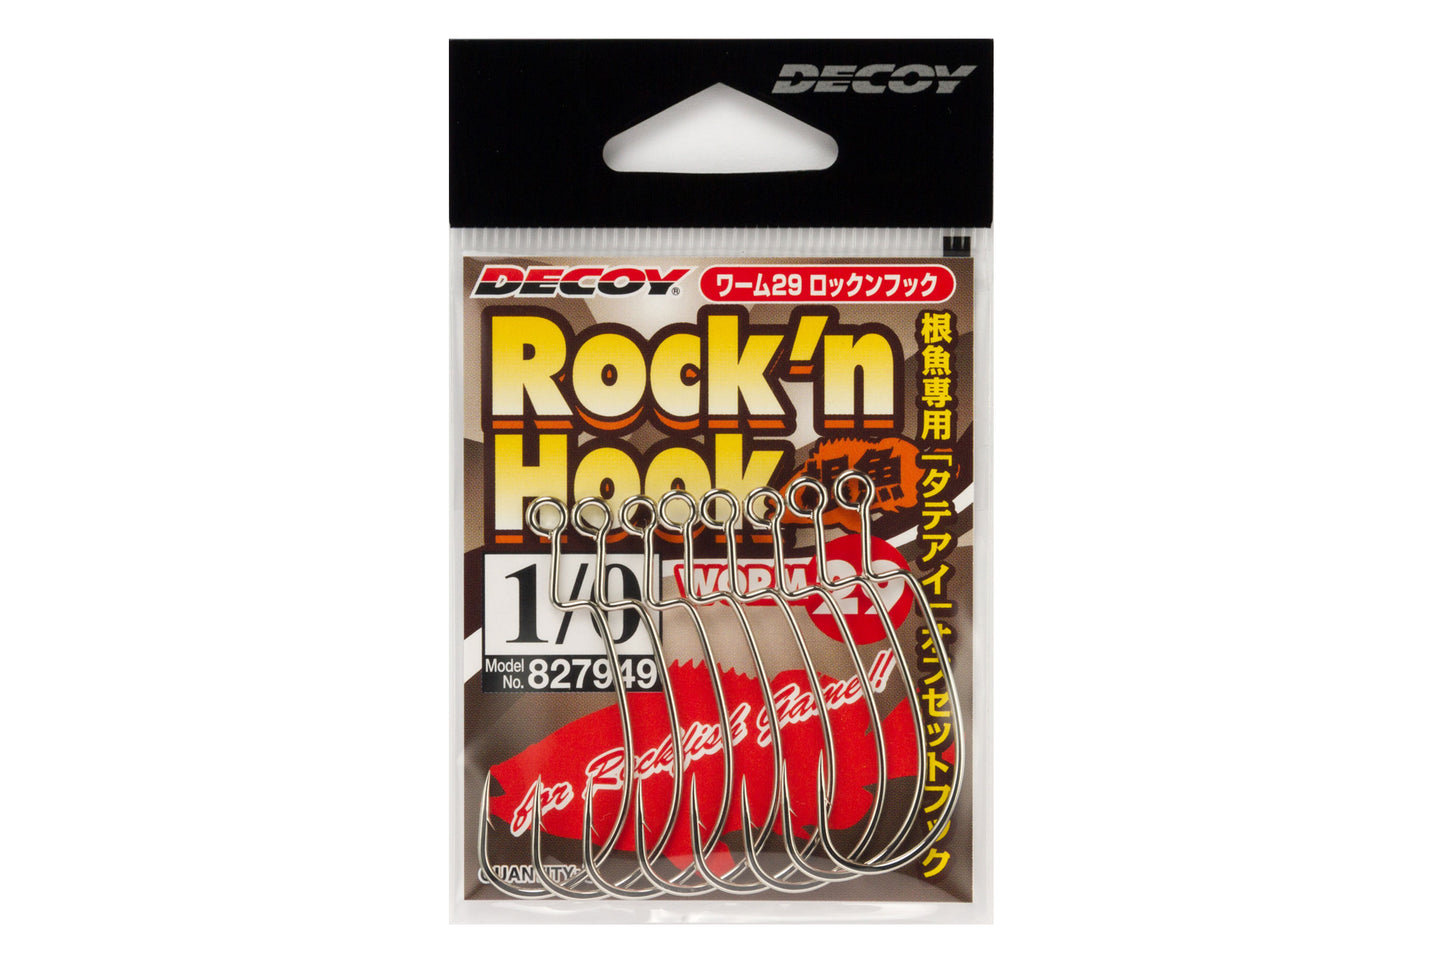 Worm29 Rock'n Hook